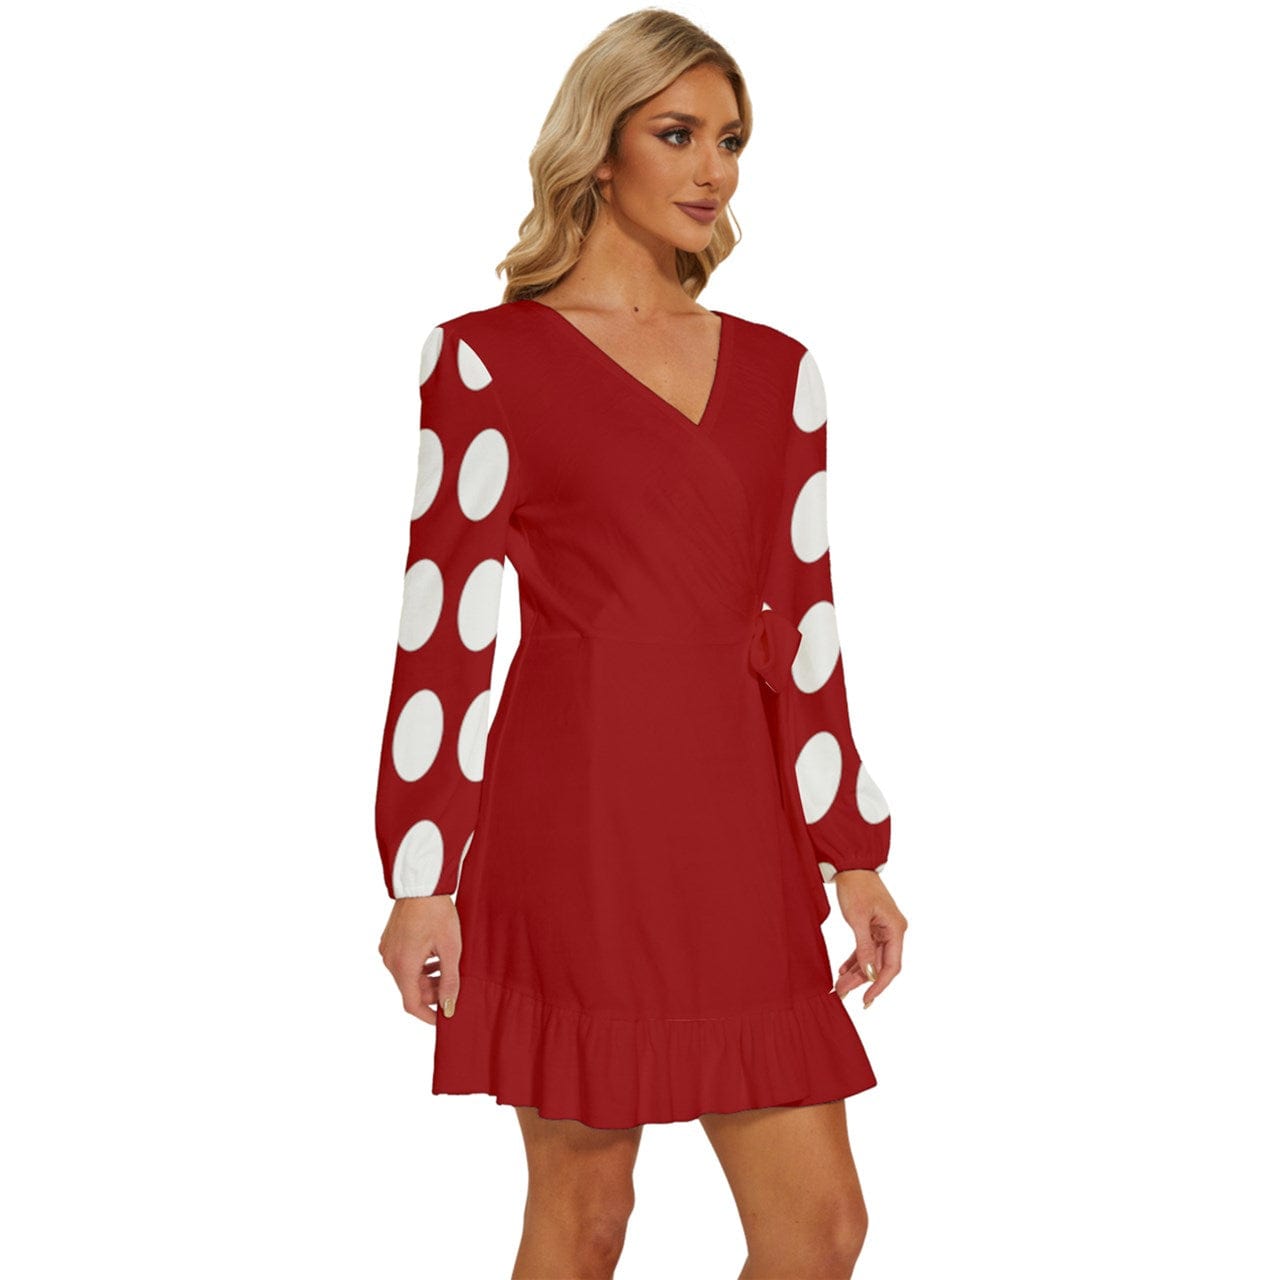 Party Dress - Long Sleeve Waist Tie Ruffle Velvet Dress - Ruby Red & Giant Dots